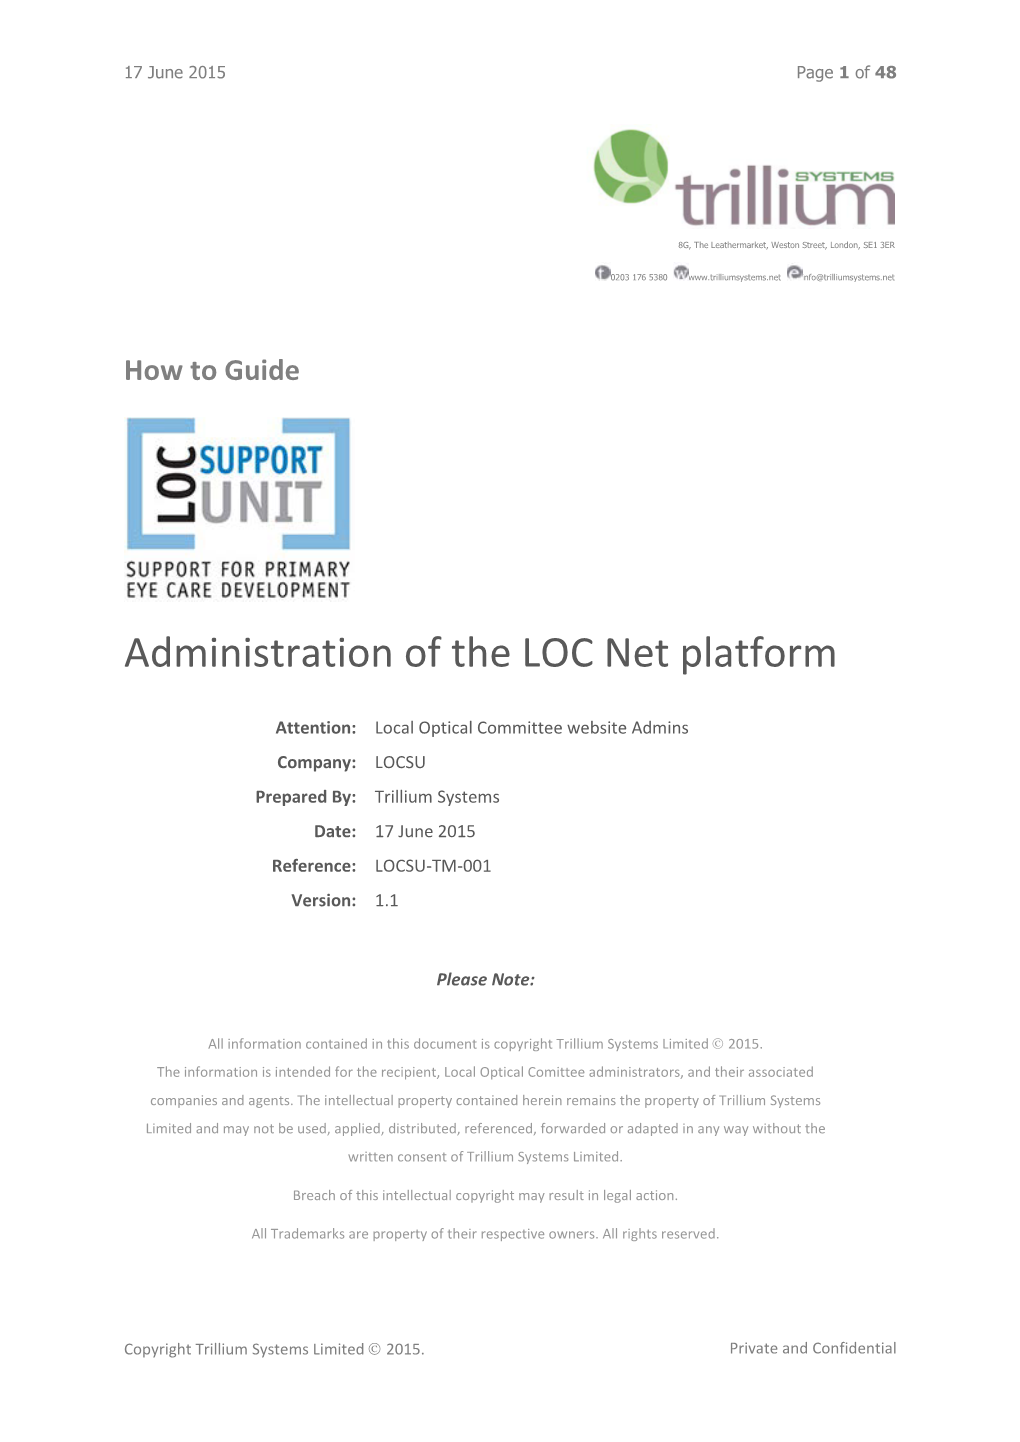 Administration of the LOC Net Platform